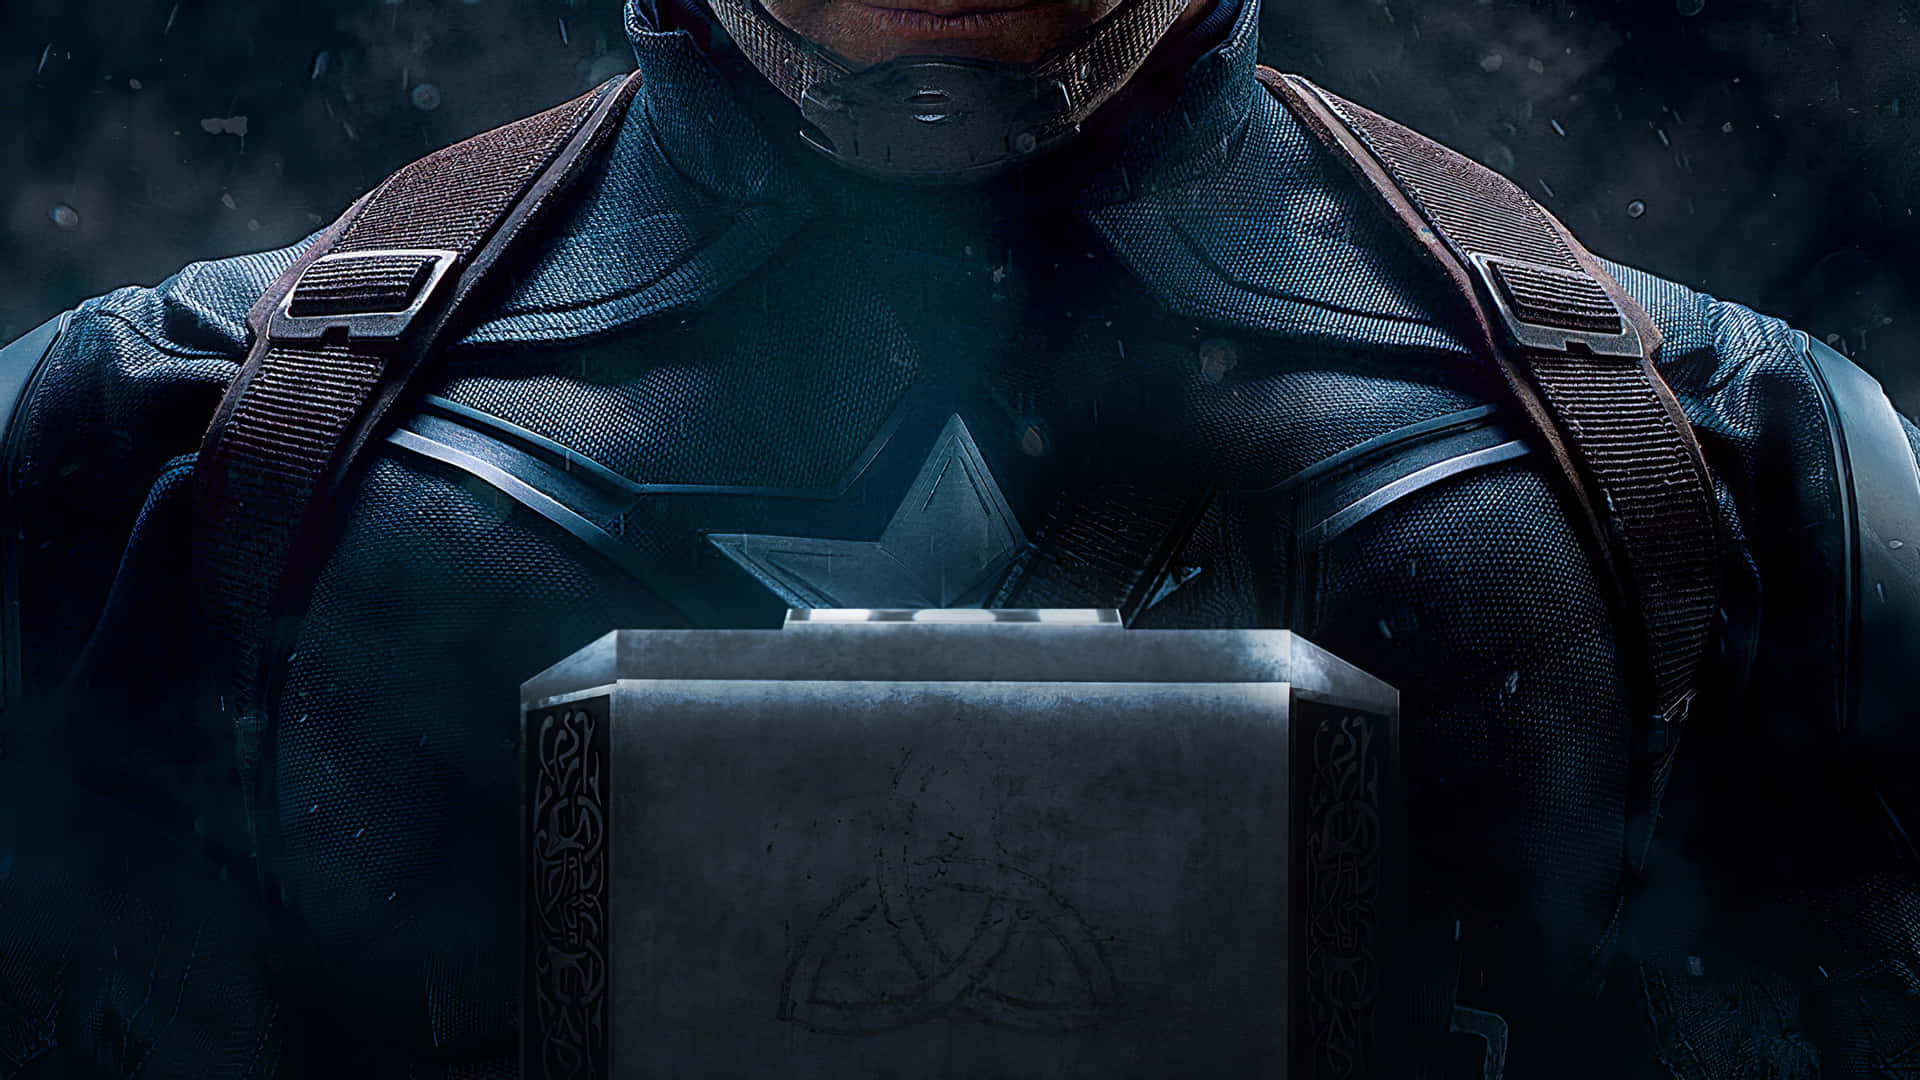 Download Captain America Endgame 4k Wallpaper 